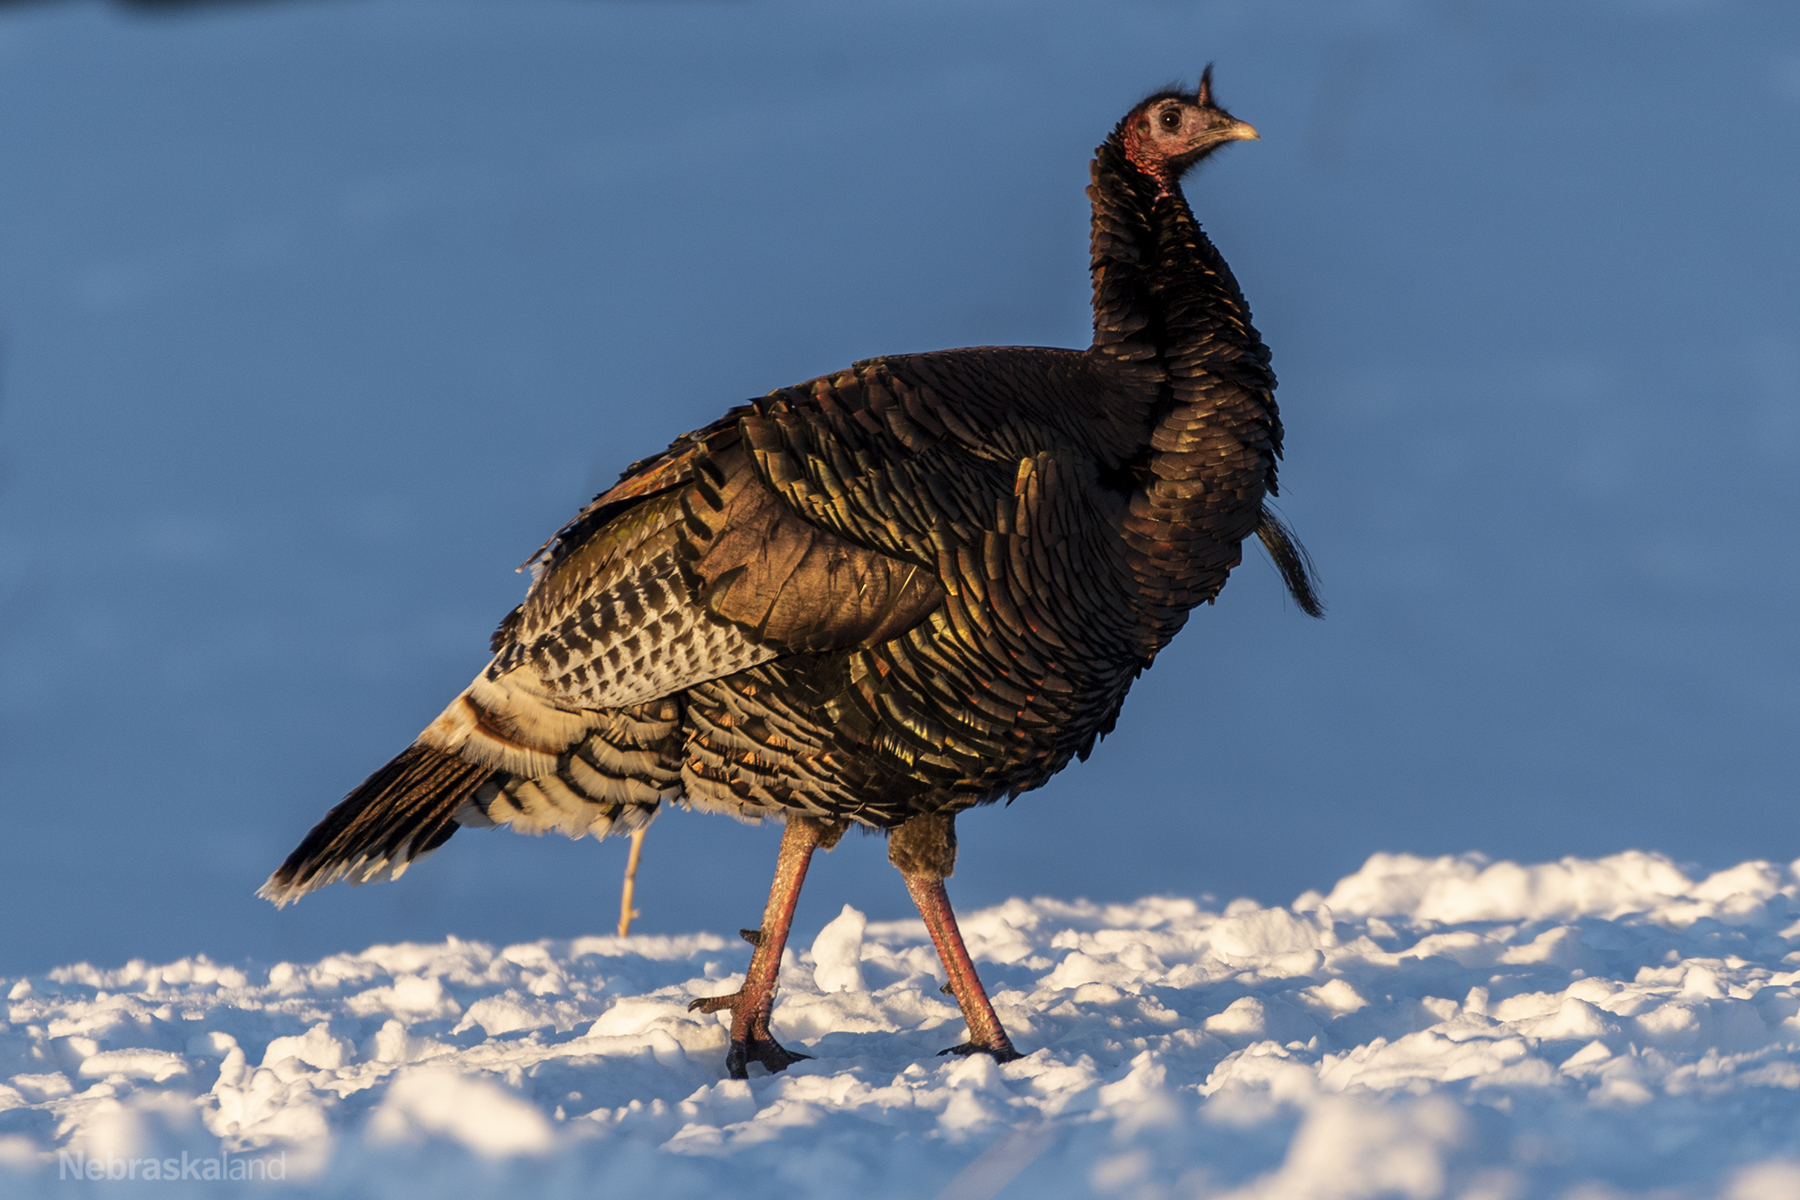 A wild turkey stands in the Nebraska snow